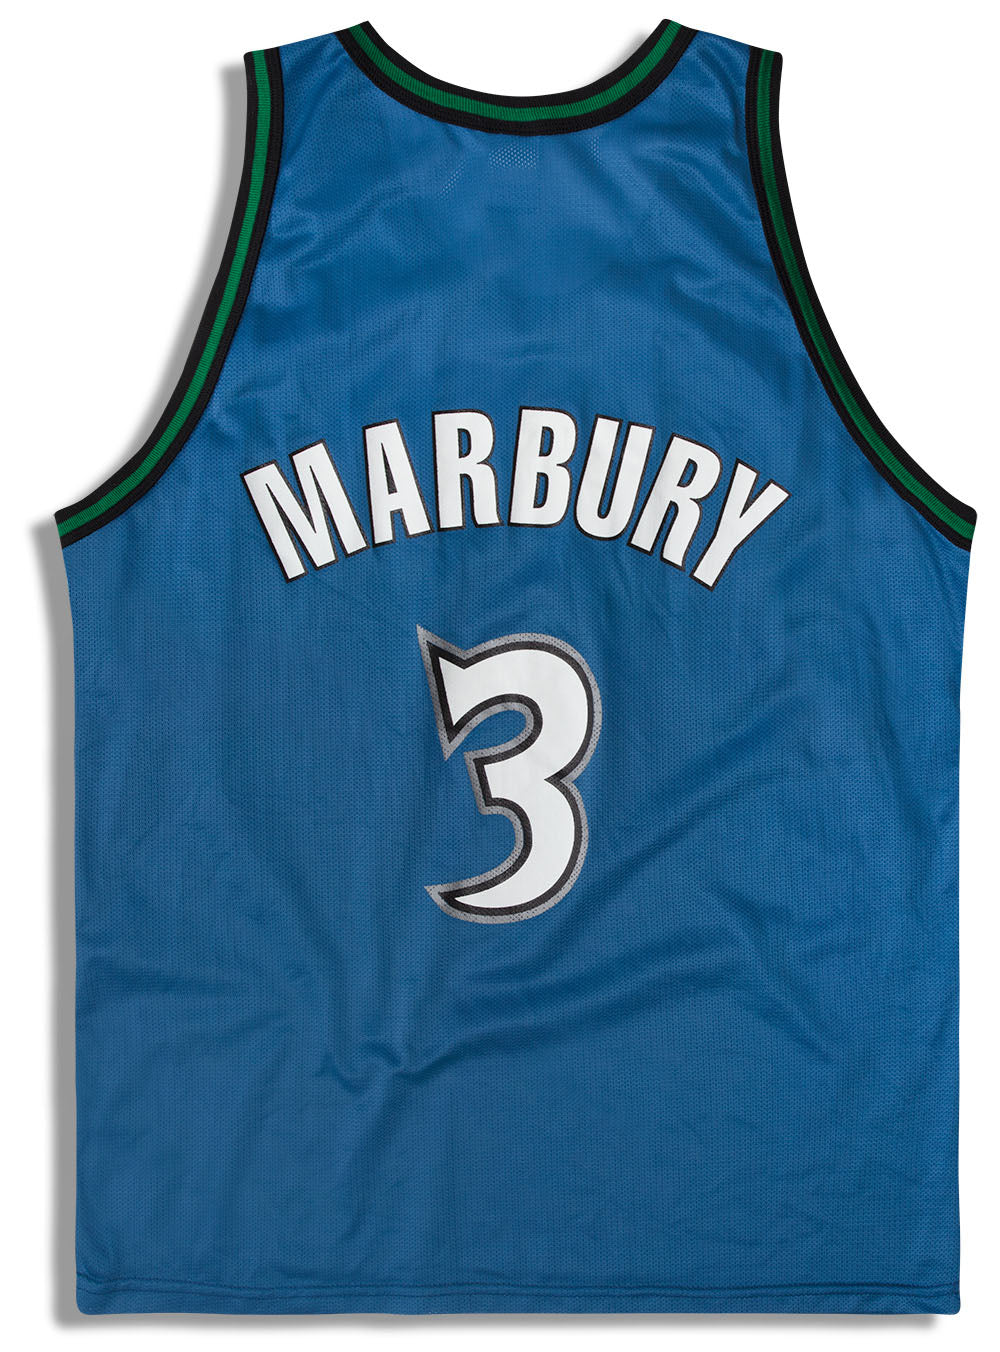 1996-99 MINNESOTA TIMBERWOLVES MARBURY #3 CHAMPION JERSEY (AWAY) XL